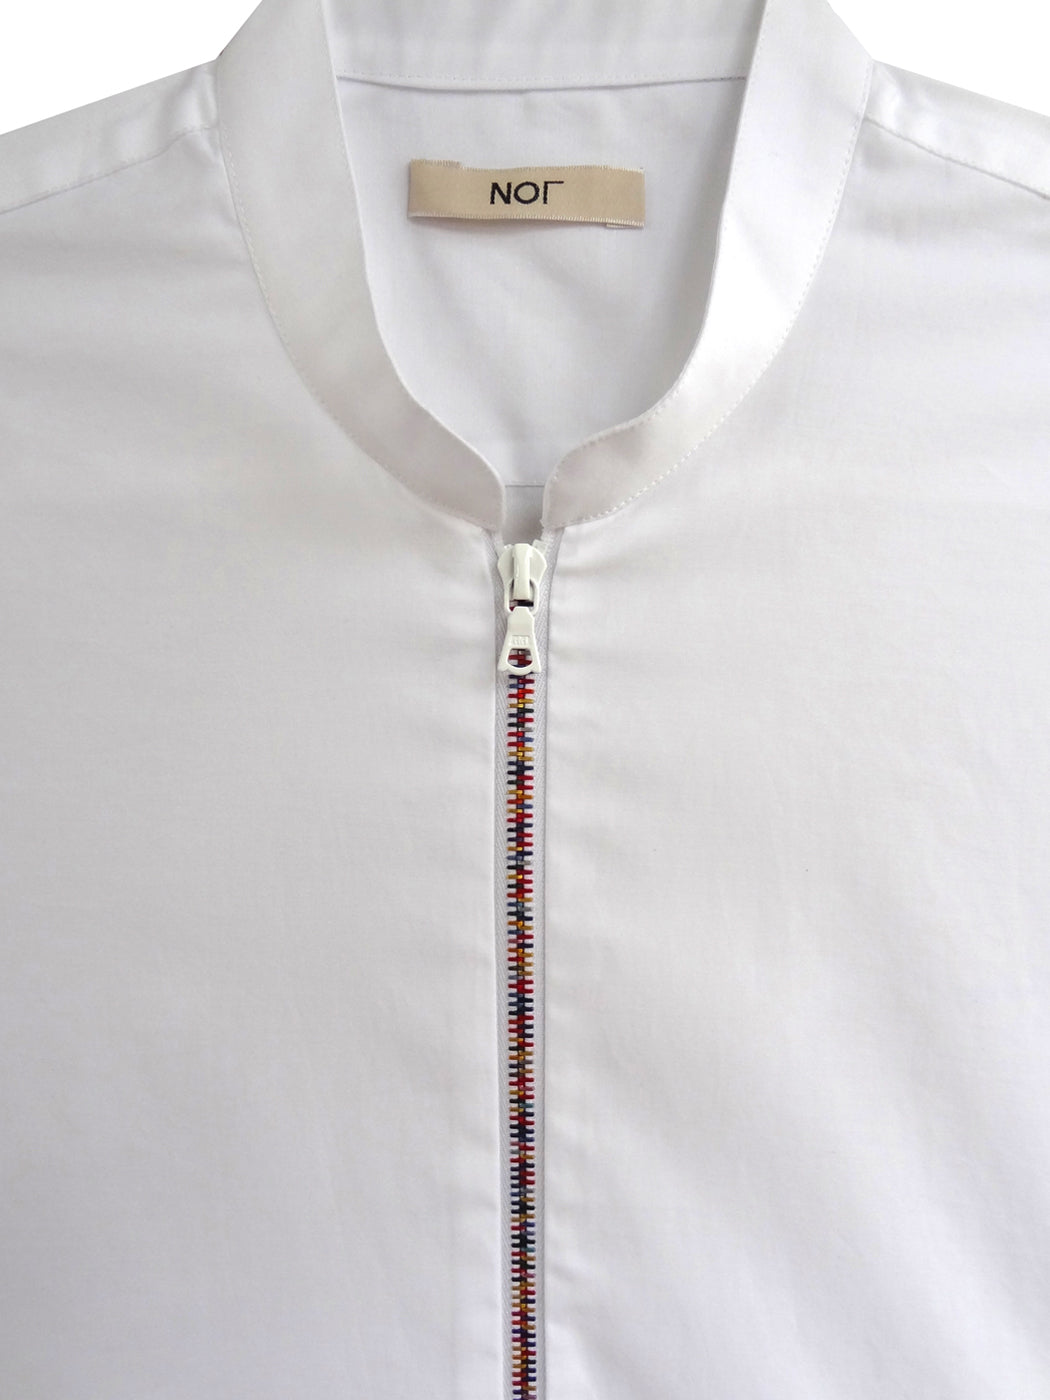 White Zipper Shirt Rainbow with Mandarin Collar – NOT by Jenny Lai